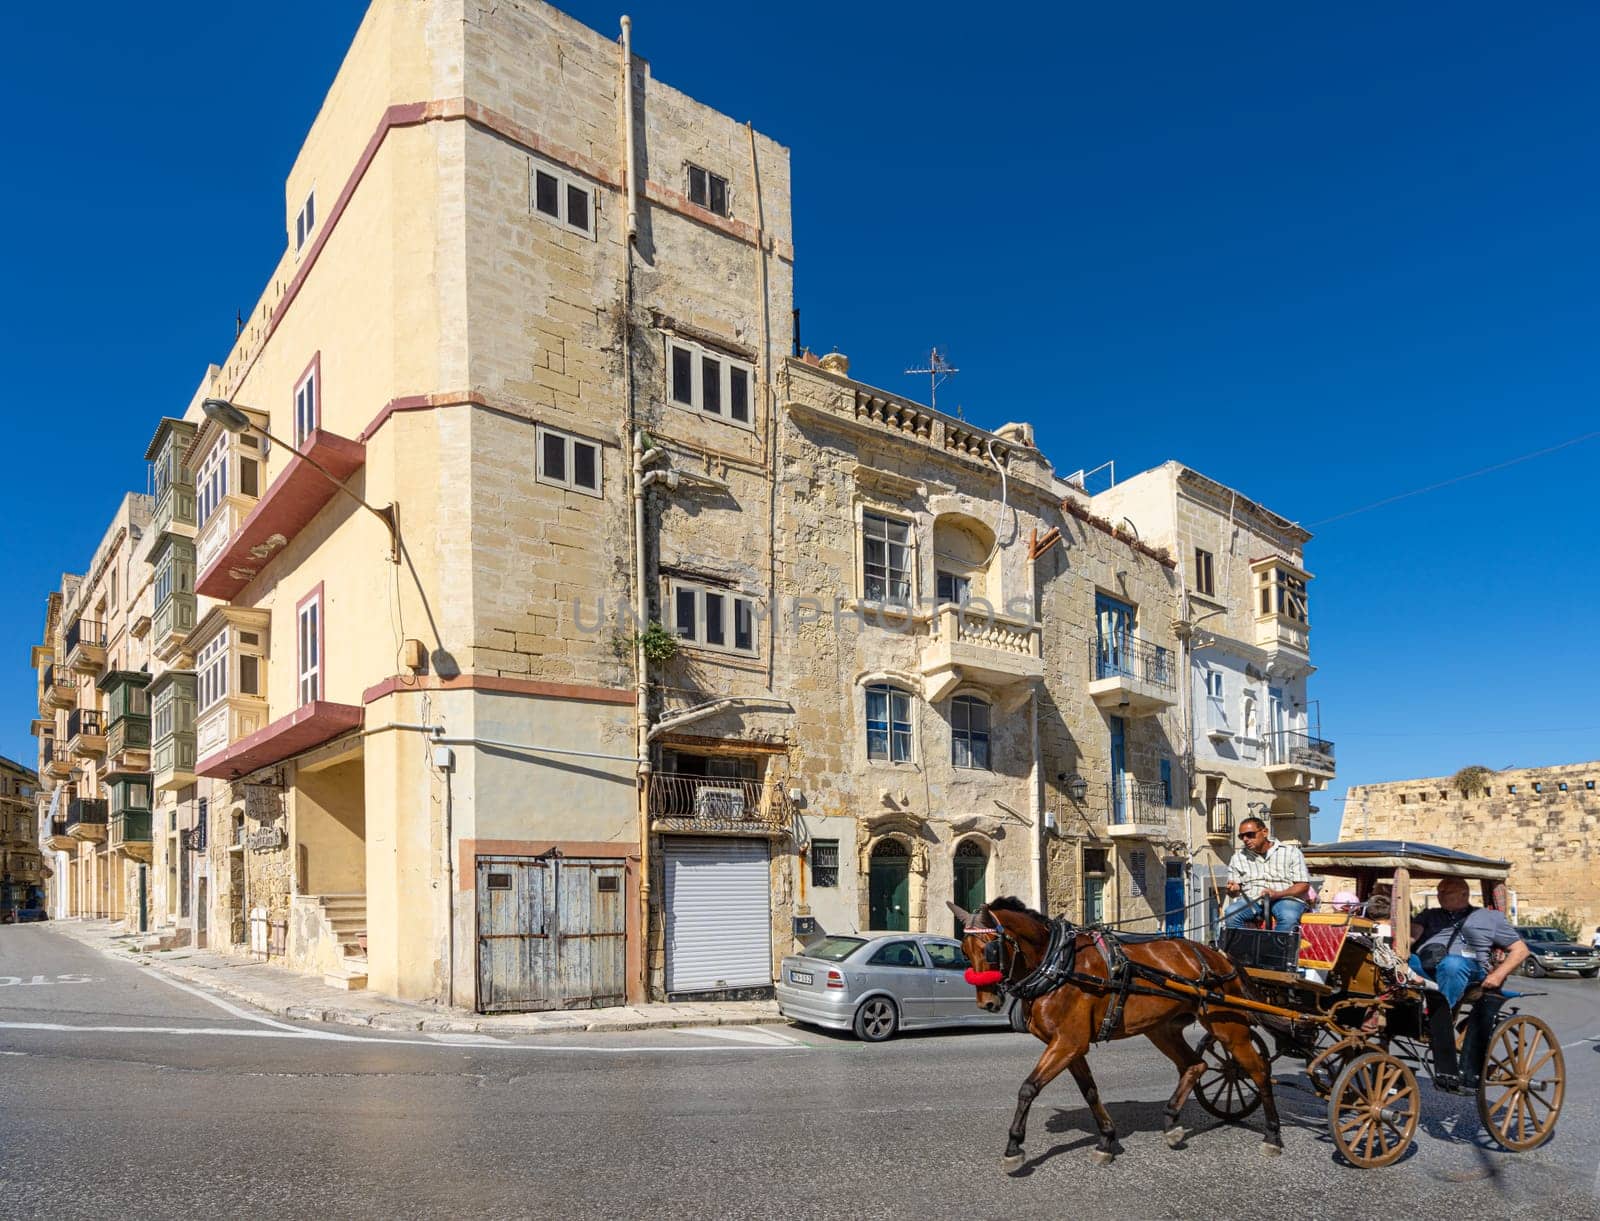 Old buildings in Valletta, Malta by sergiodv